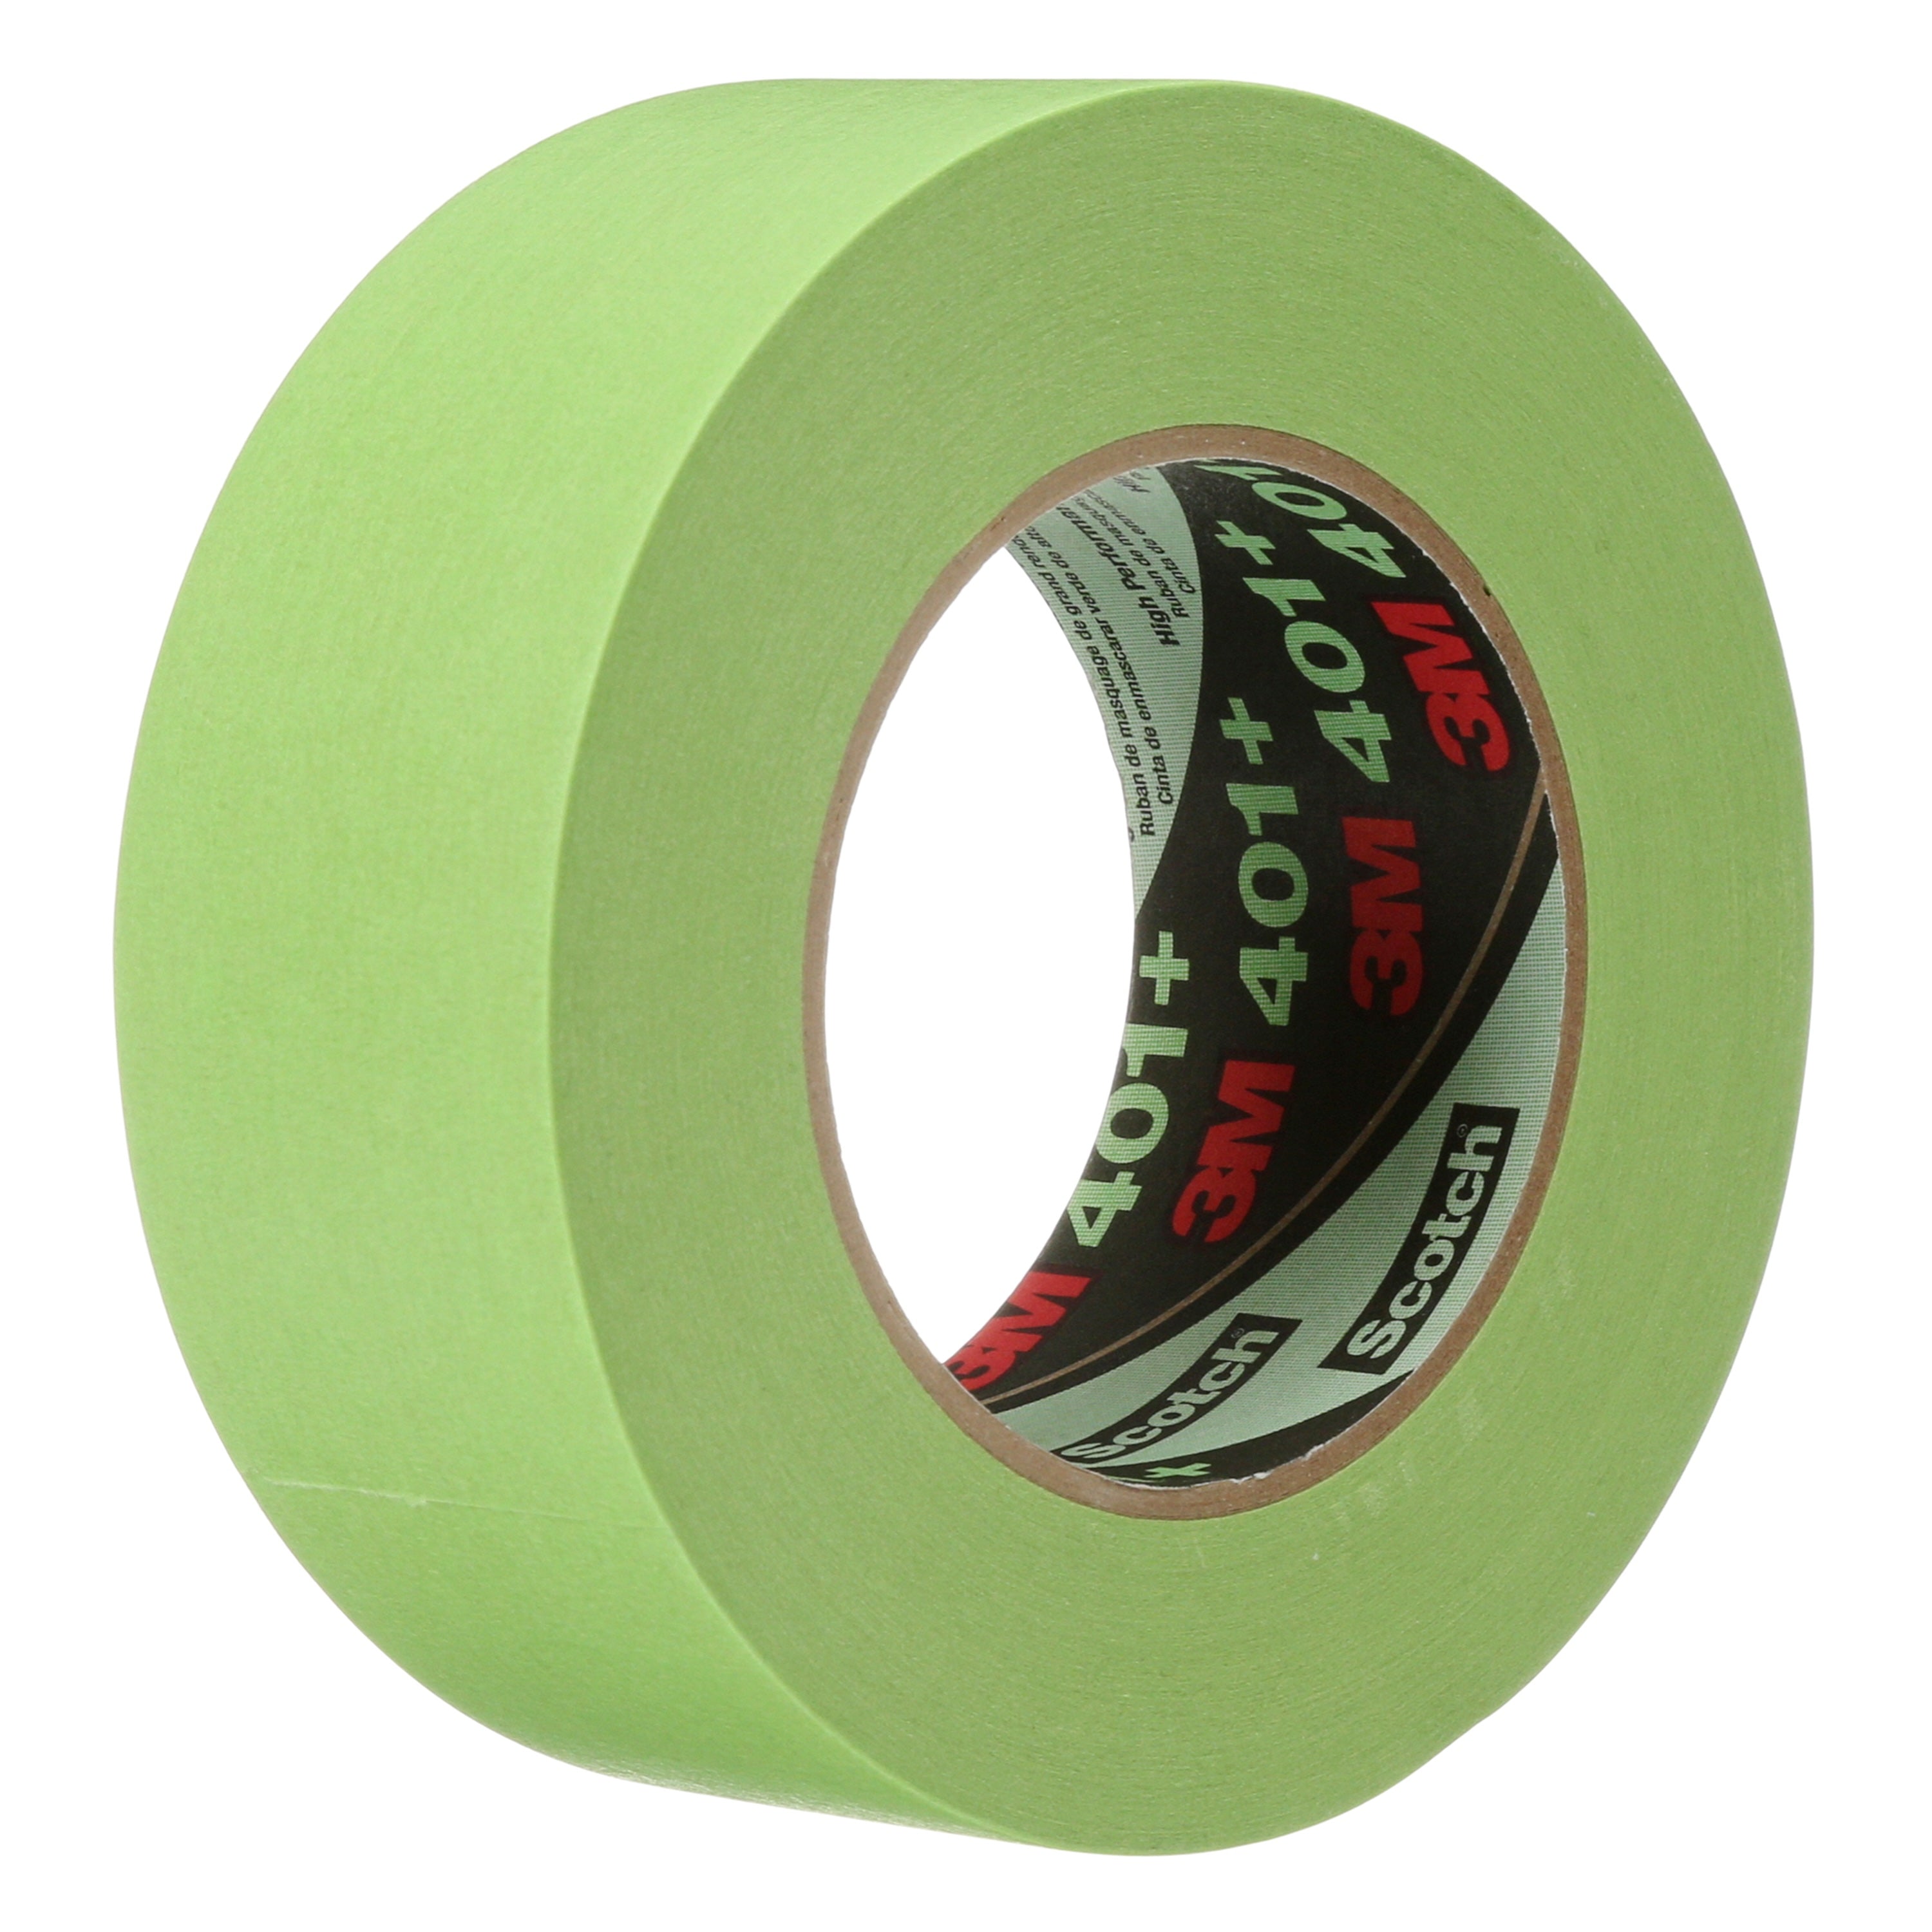 3M High Performance Green Masking Tape 401+ 48 mm x 55 m 6.7 mil, 1 Roll